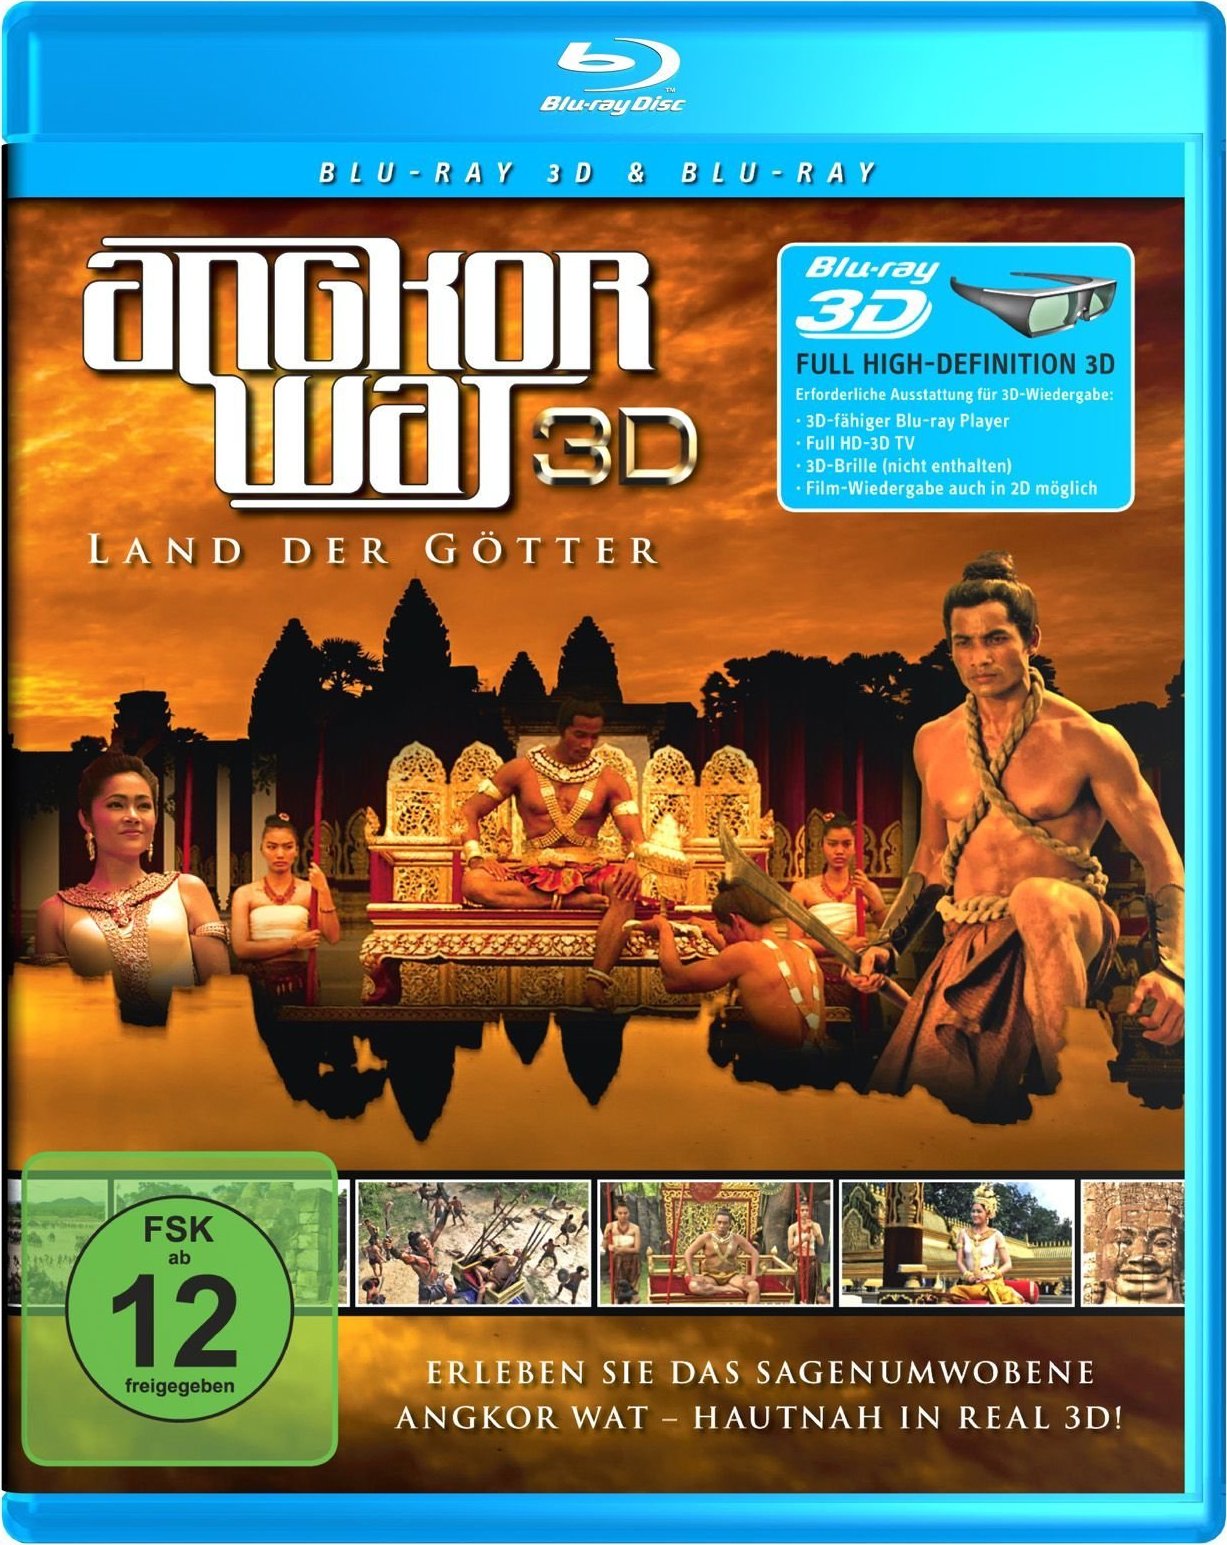 Kanon bijeenkomst Met pensioen gaan Angkor Wat 3D - Land Der Götter Blu-ray (Angkor: Land of the Gods 3D)  (Germany)